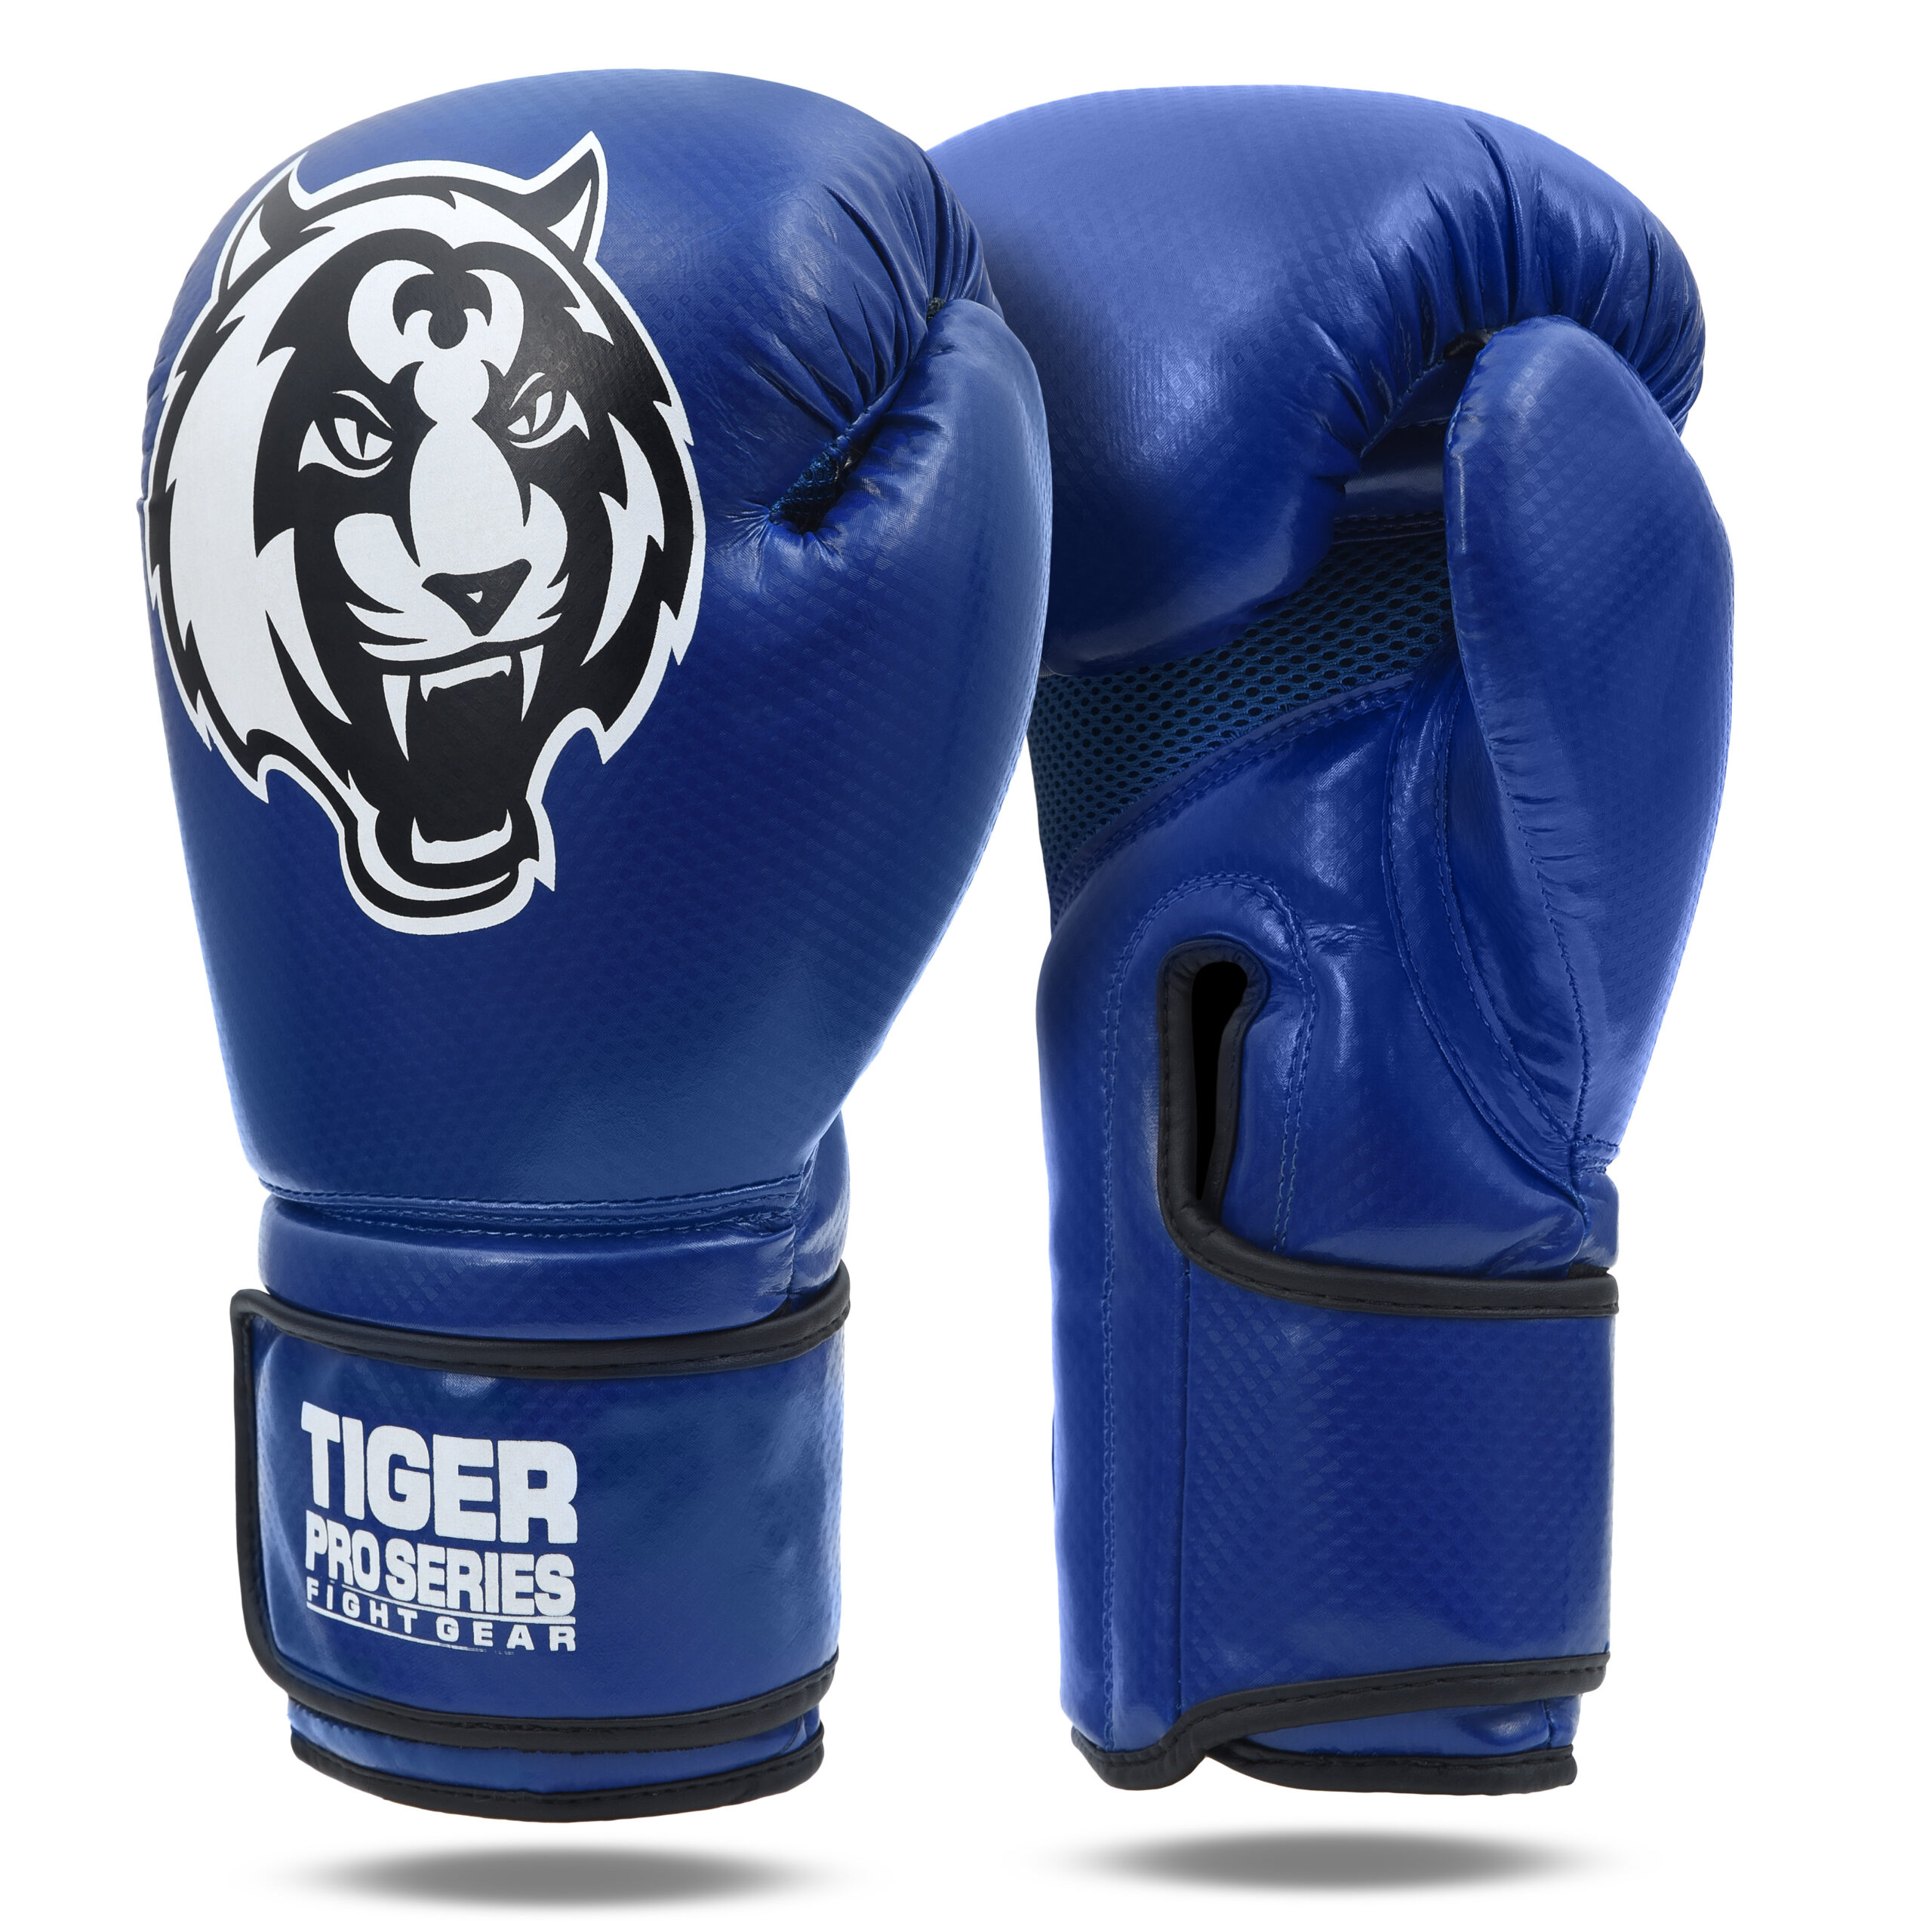 Tiger Pro Starter Boxing Gloves